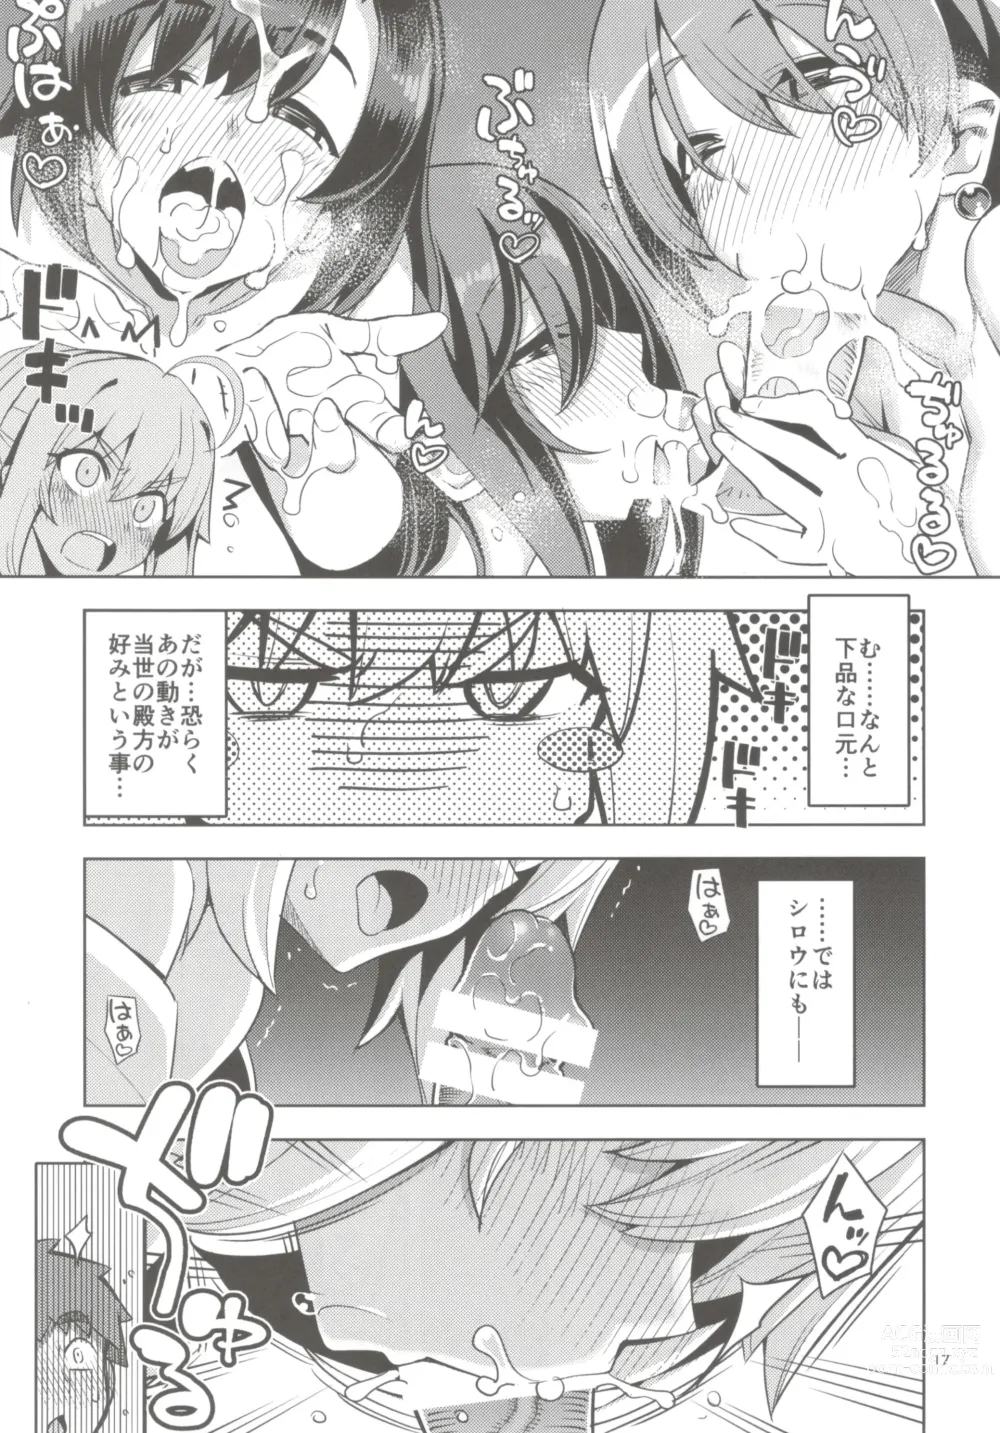 Page 17 of doujinshi RE32